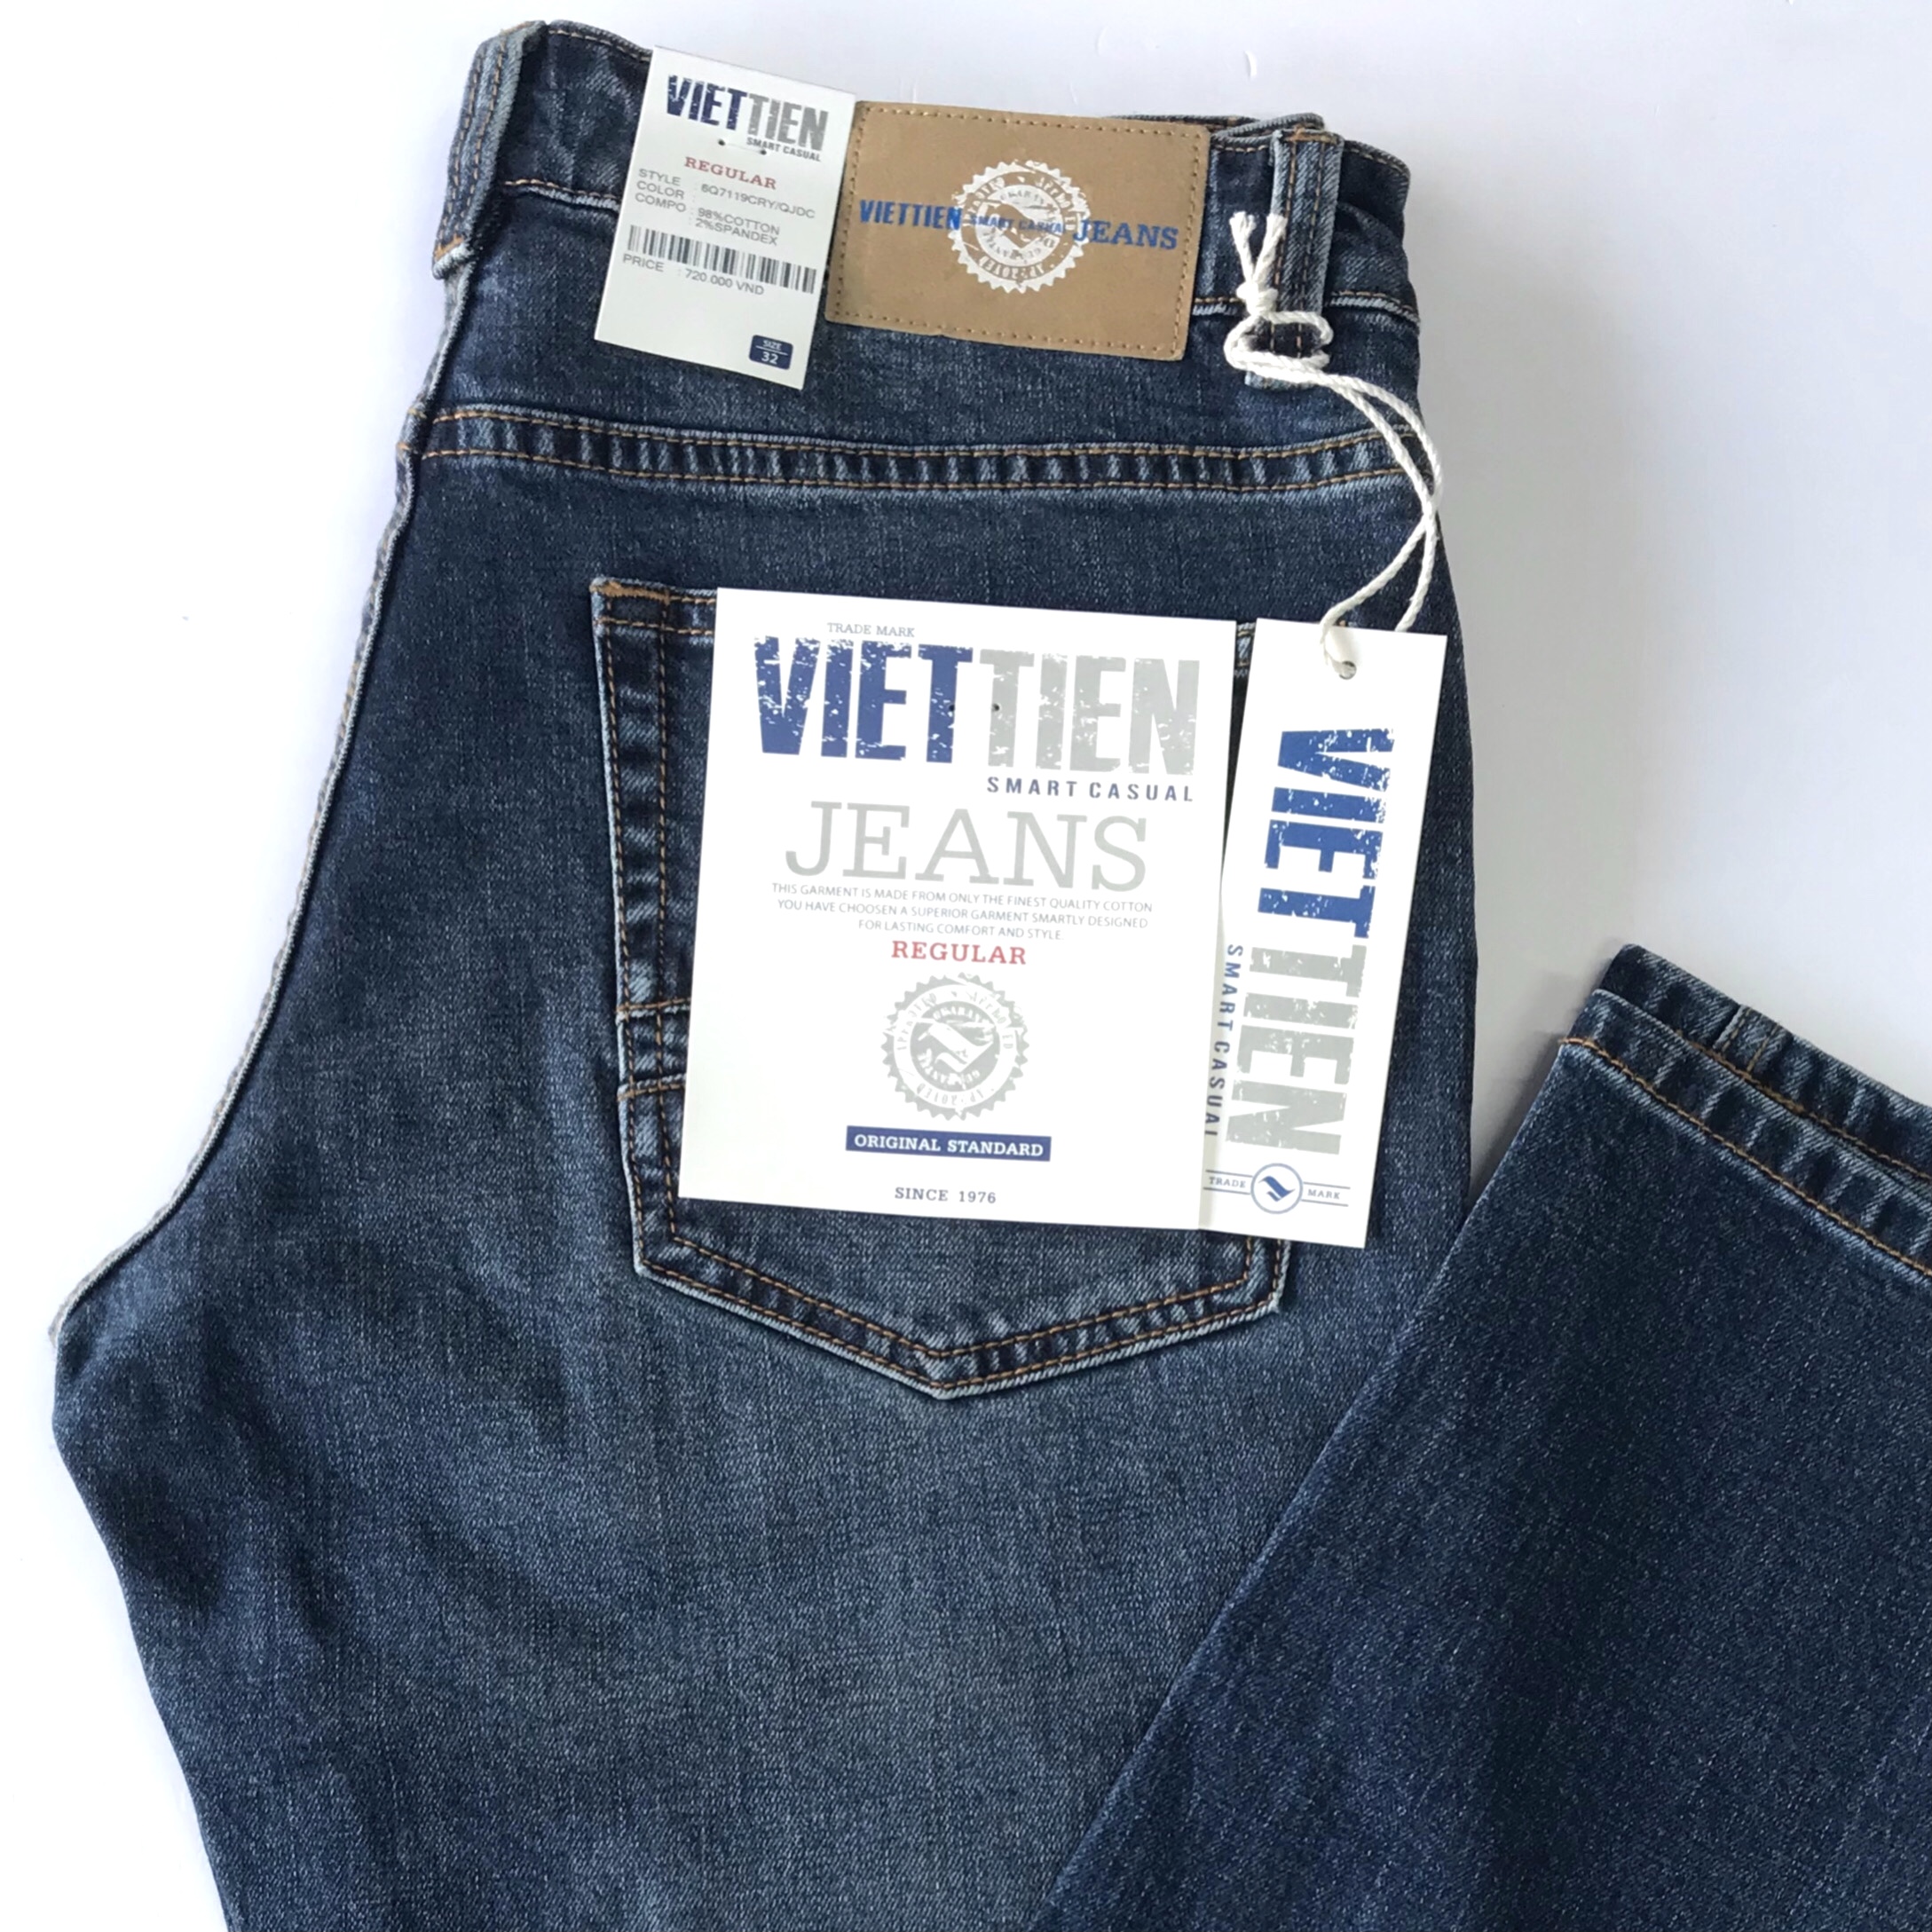 Viettien - Quần jeans nam smart casual regular fit 6Q7119